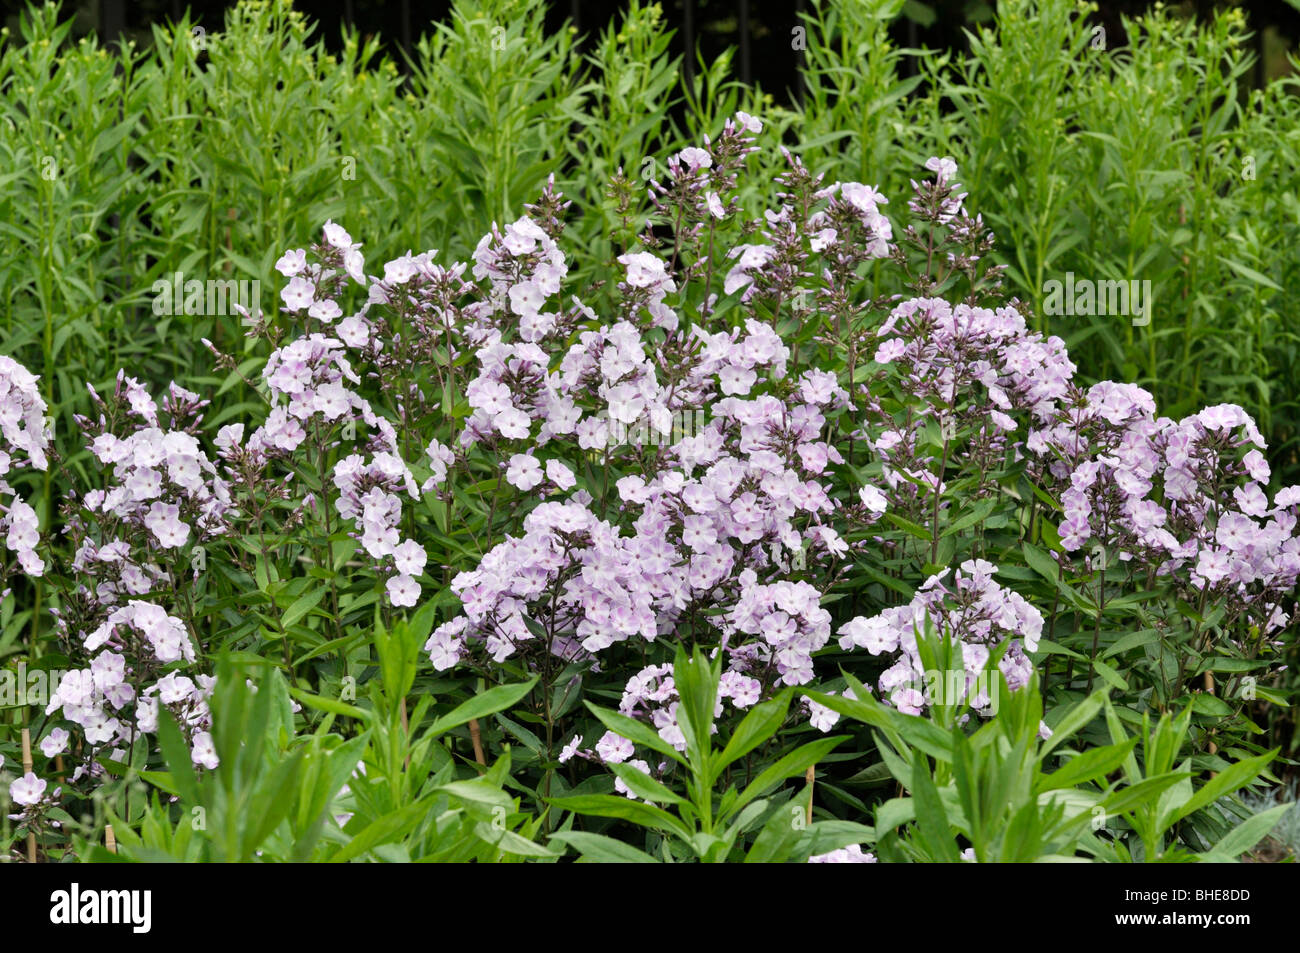 Garden phlox (Phlox paniculata 'Violetta Gloriosa') Stock Photo